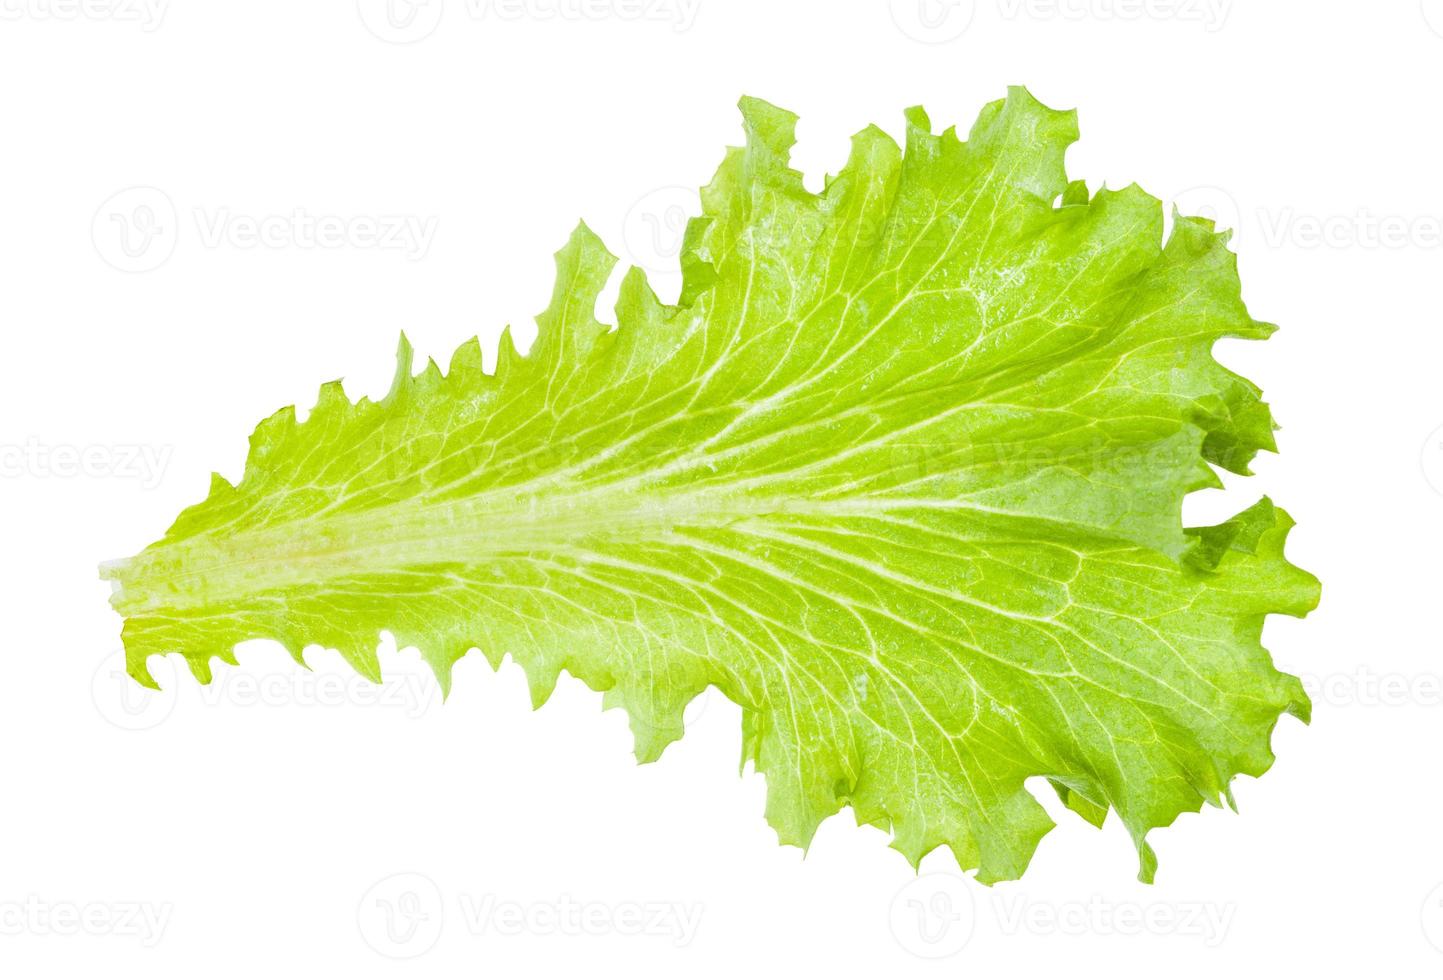 frisches grünes Blatt Blattsalat isoliert auf weiss foto